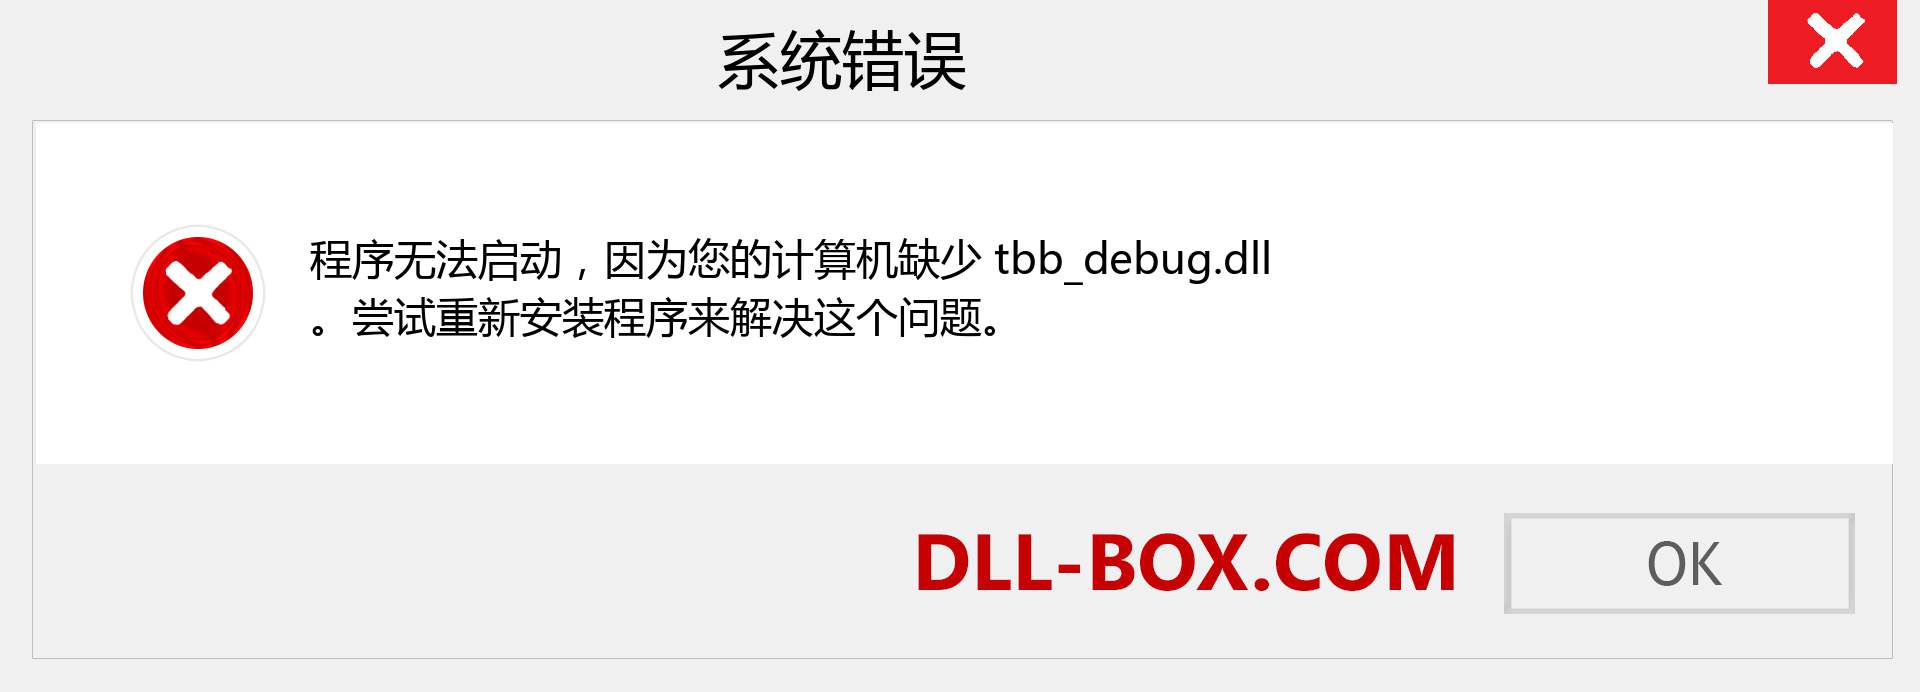 tbb_debug.dll 文件丢失？。 适用于 Windows 7、8、10 的下载 - 修复 Windows、照片、图像上的 tbb_debug dll 丢失错误